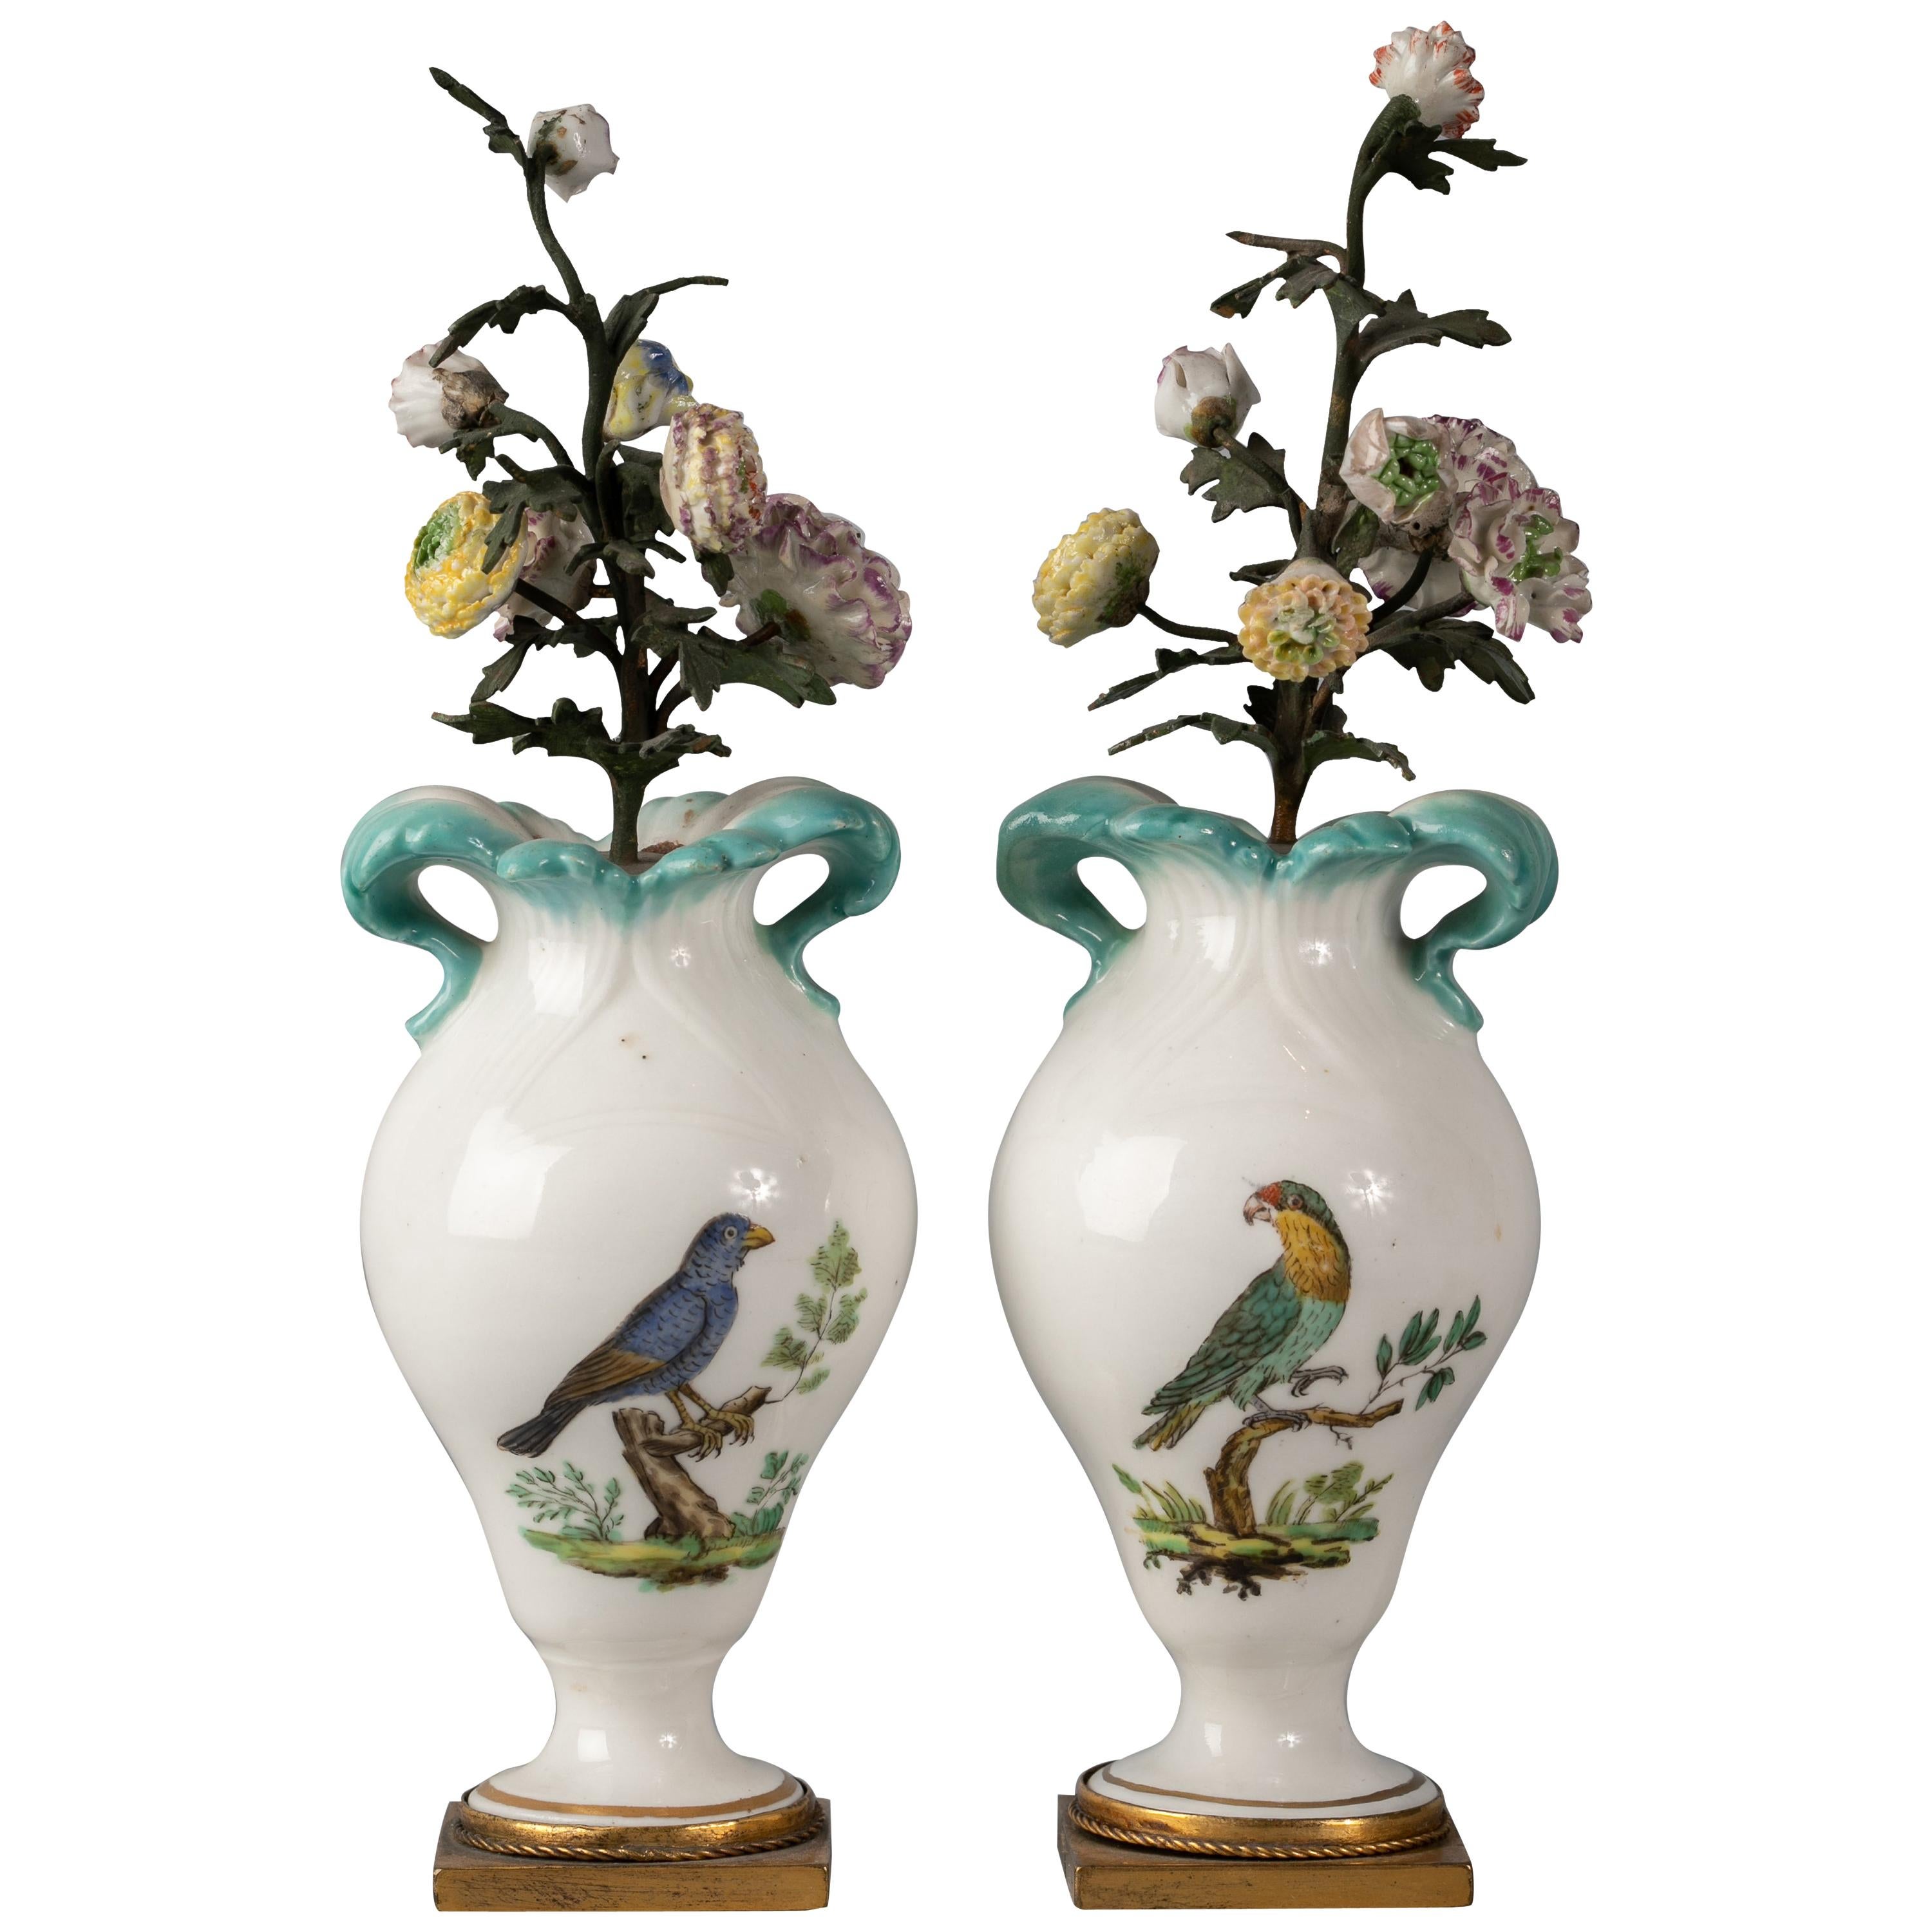 Pair of English Porcelain Urn-Shaped Vases, Coalport, circa 1820